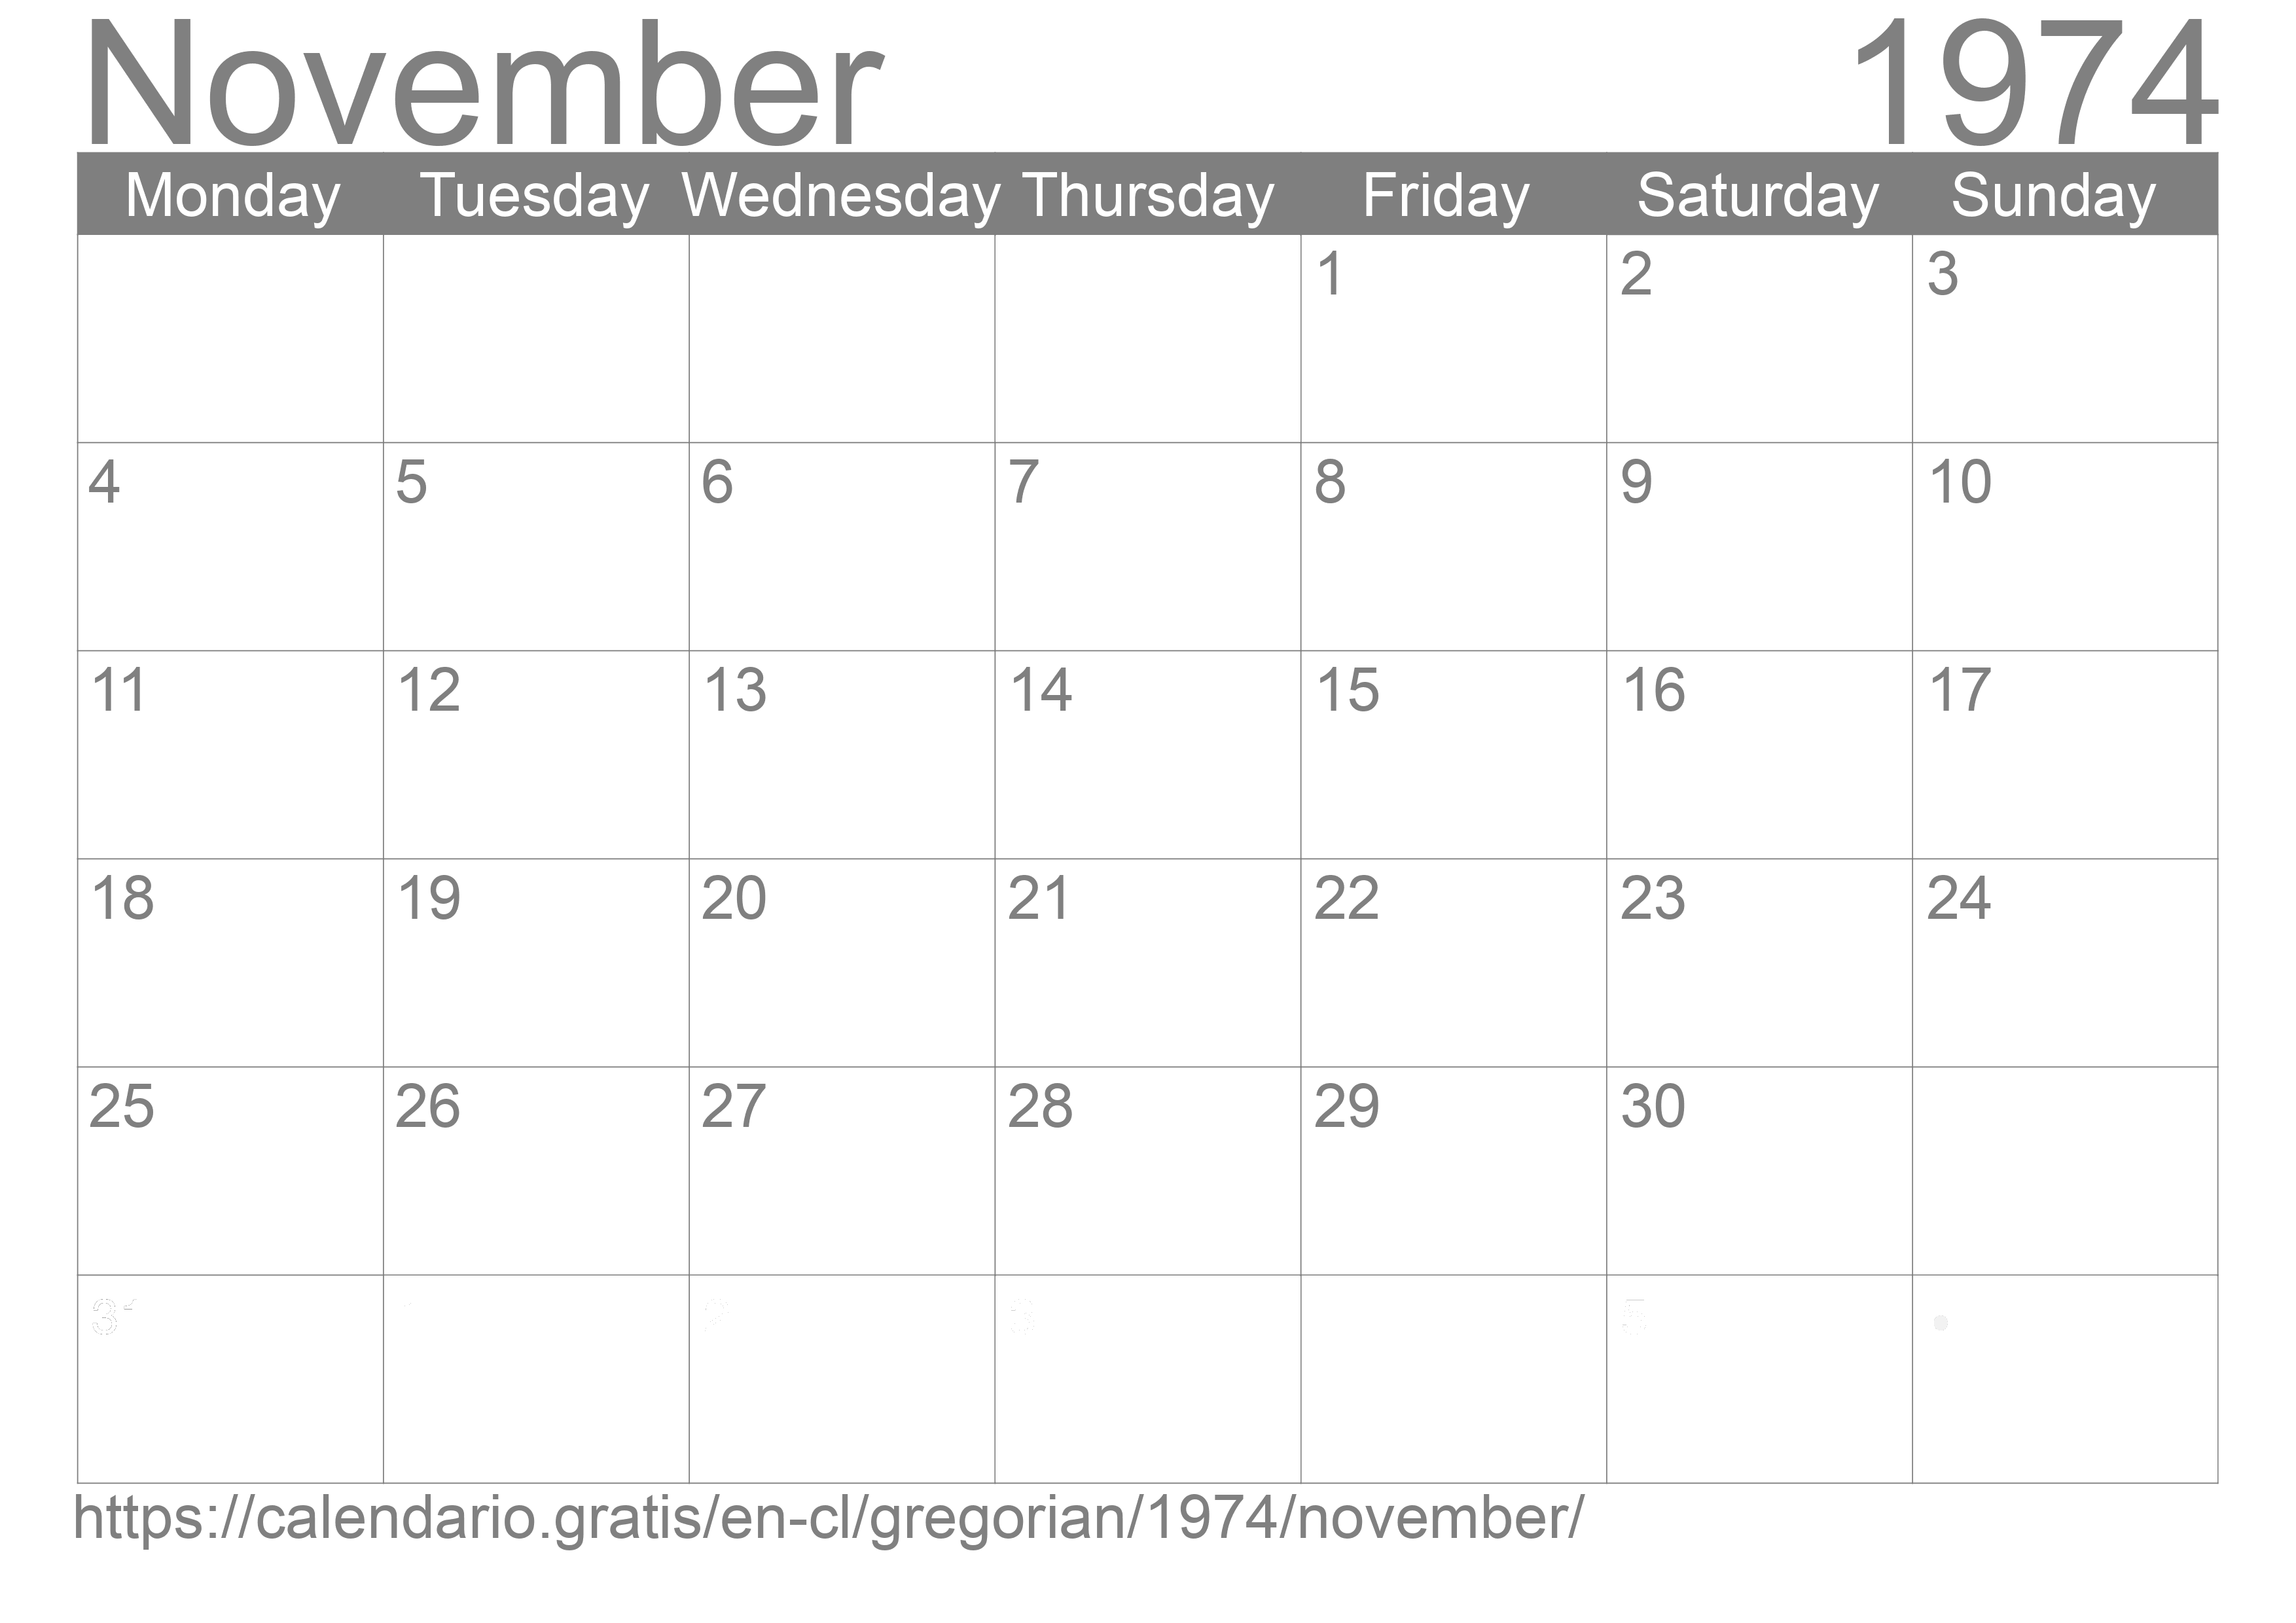 Calendar November 1974 to print